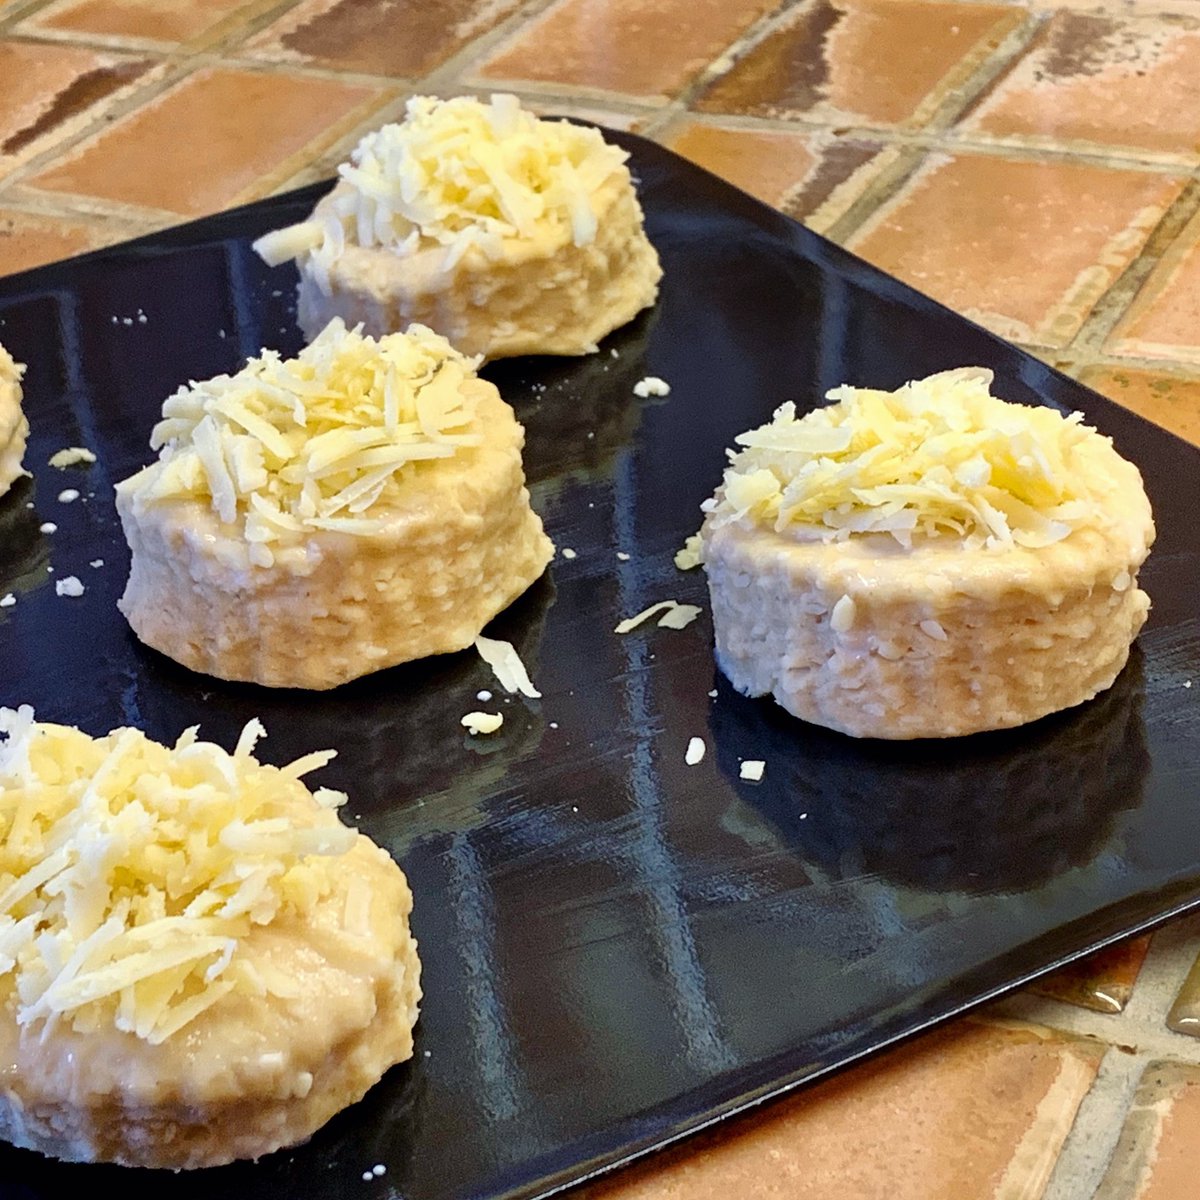 Cheese scones for supper.

#cheese #scones #cheesescones #supper #maryberry #recipe #maryberryrecipe #bakingfromscratch #baking #bakinglife #nikkilewisphotography #nikkilewisphotos #hertfordshire #herts #hertslife #cooking #isolationbaking #isolationlife #lockdownbaking #lockdown